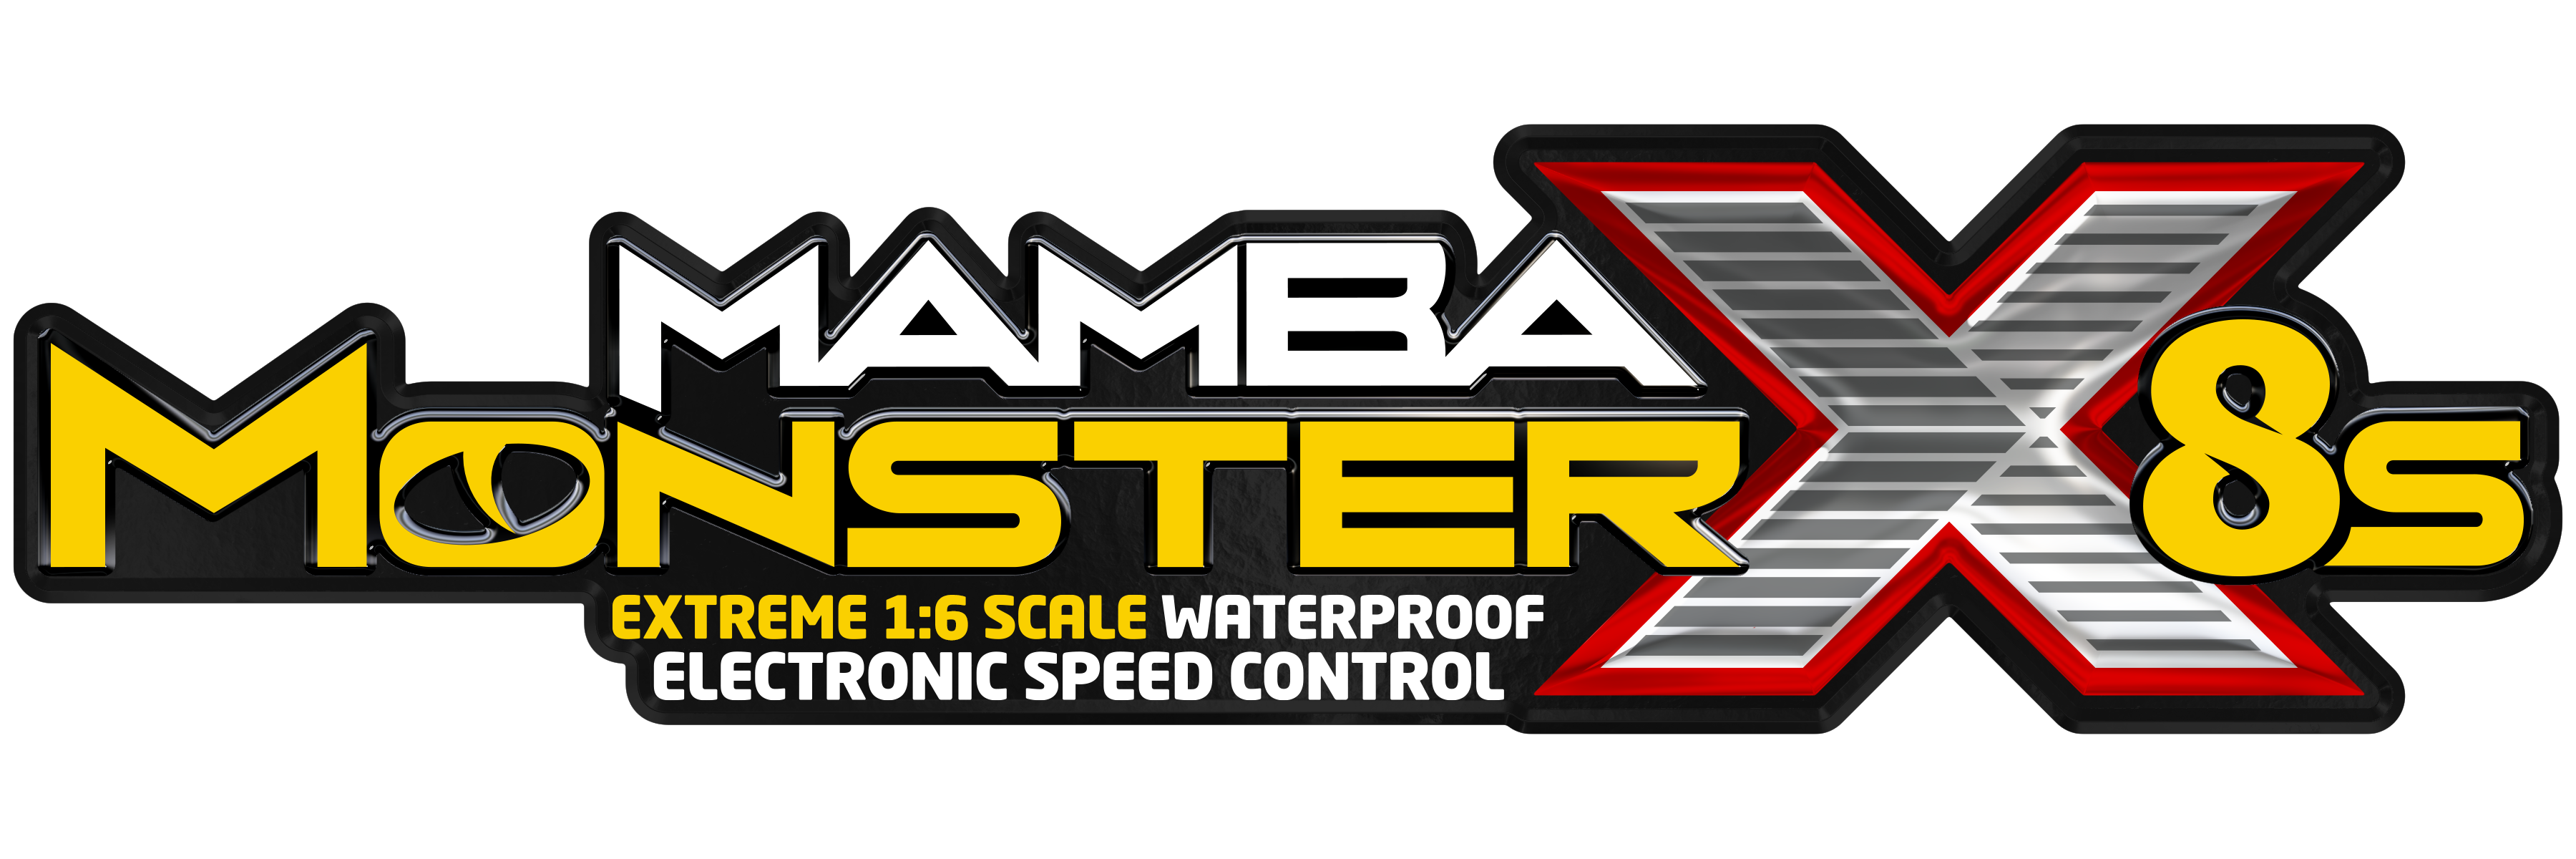 Motor castle mamba monster extreme 1717 big block brushless